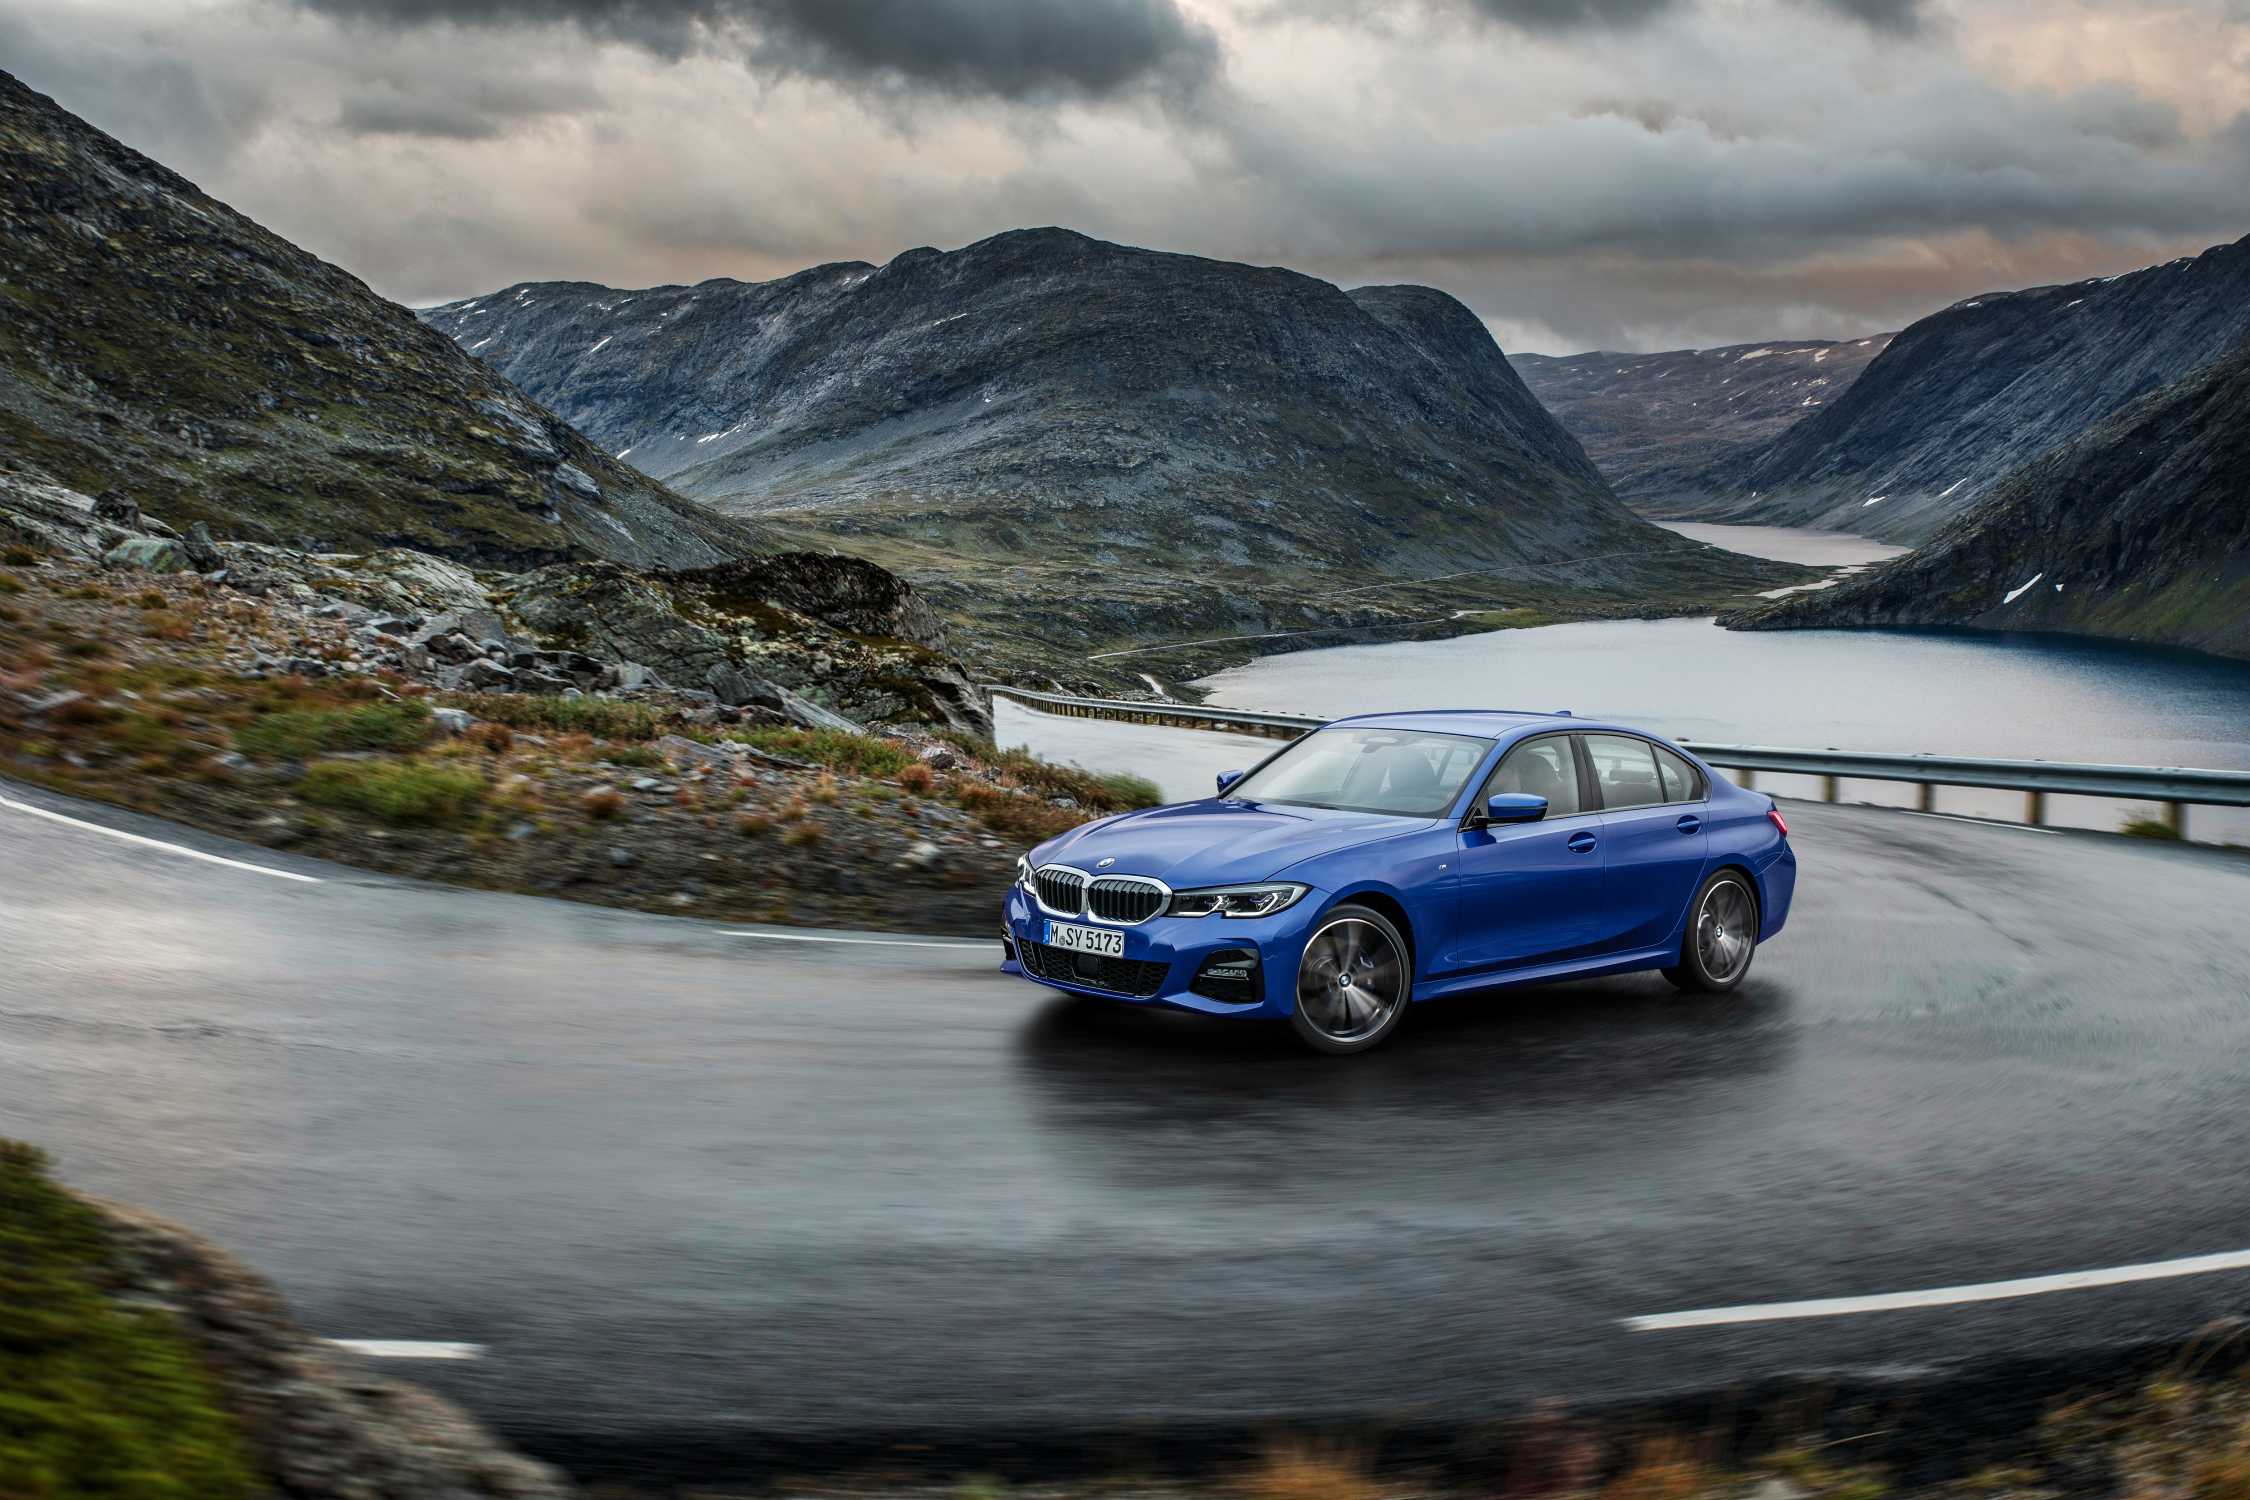 The all-new BMW 3 Series Sedan, Model M Sport, Portimao blue metallic, Rim 19” Styling 791 M (10/2018).